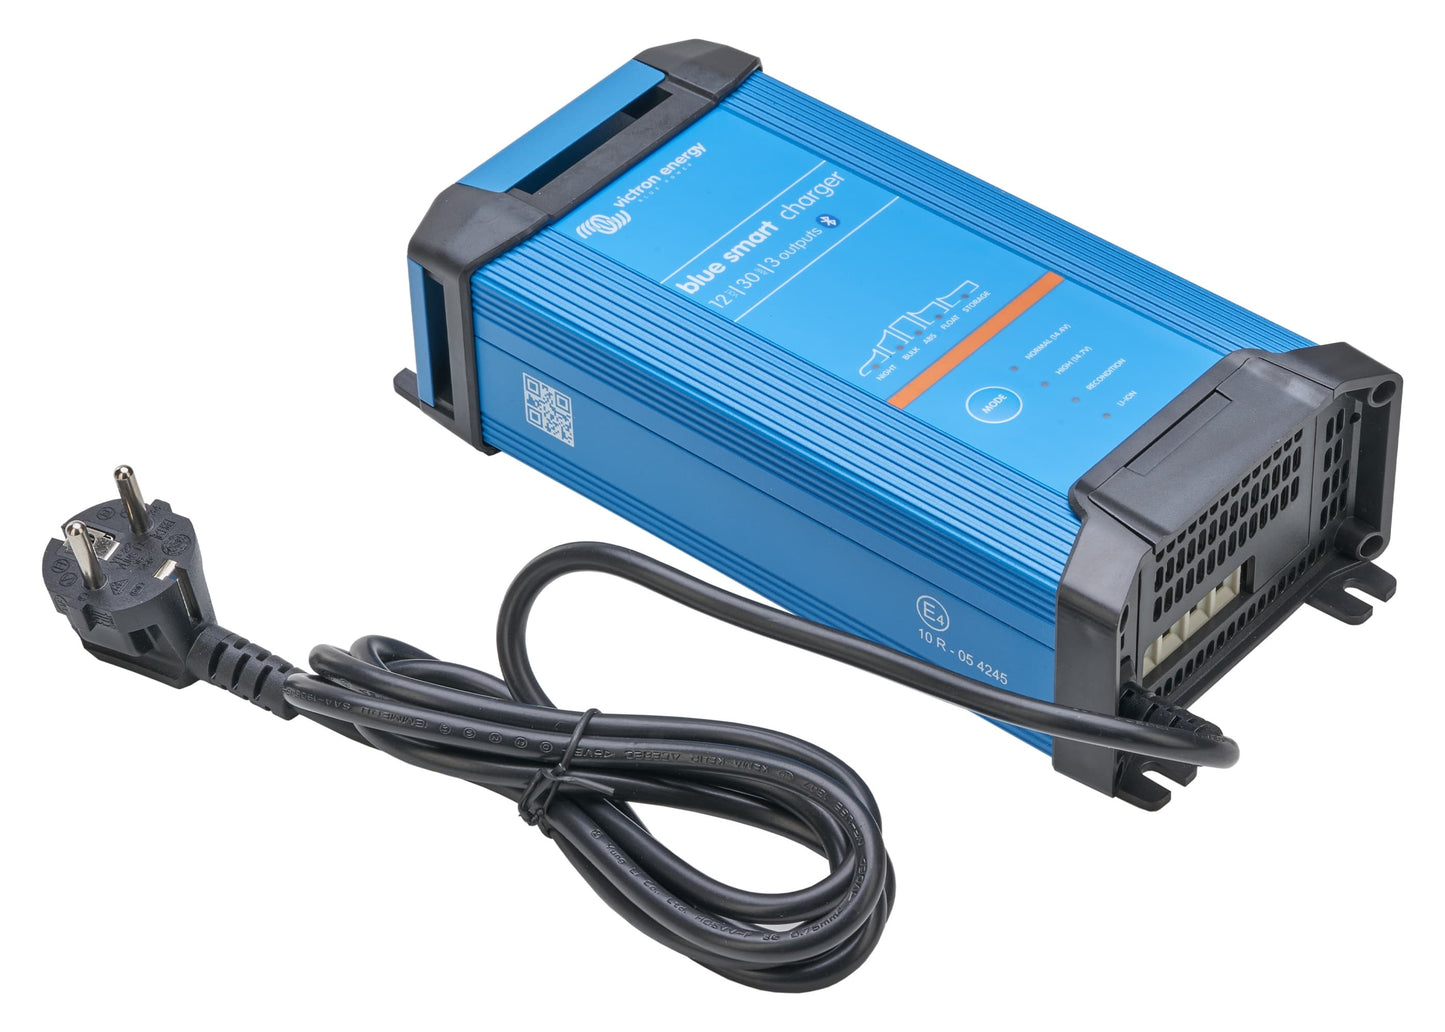 Caricabatterie Blue smart IP22 a 3 uscite 12V, 30 amp